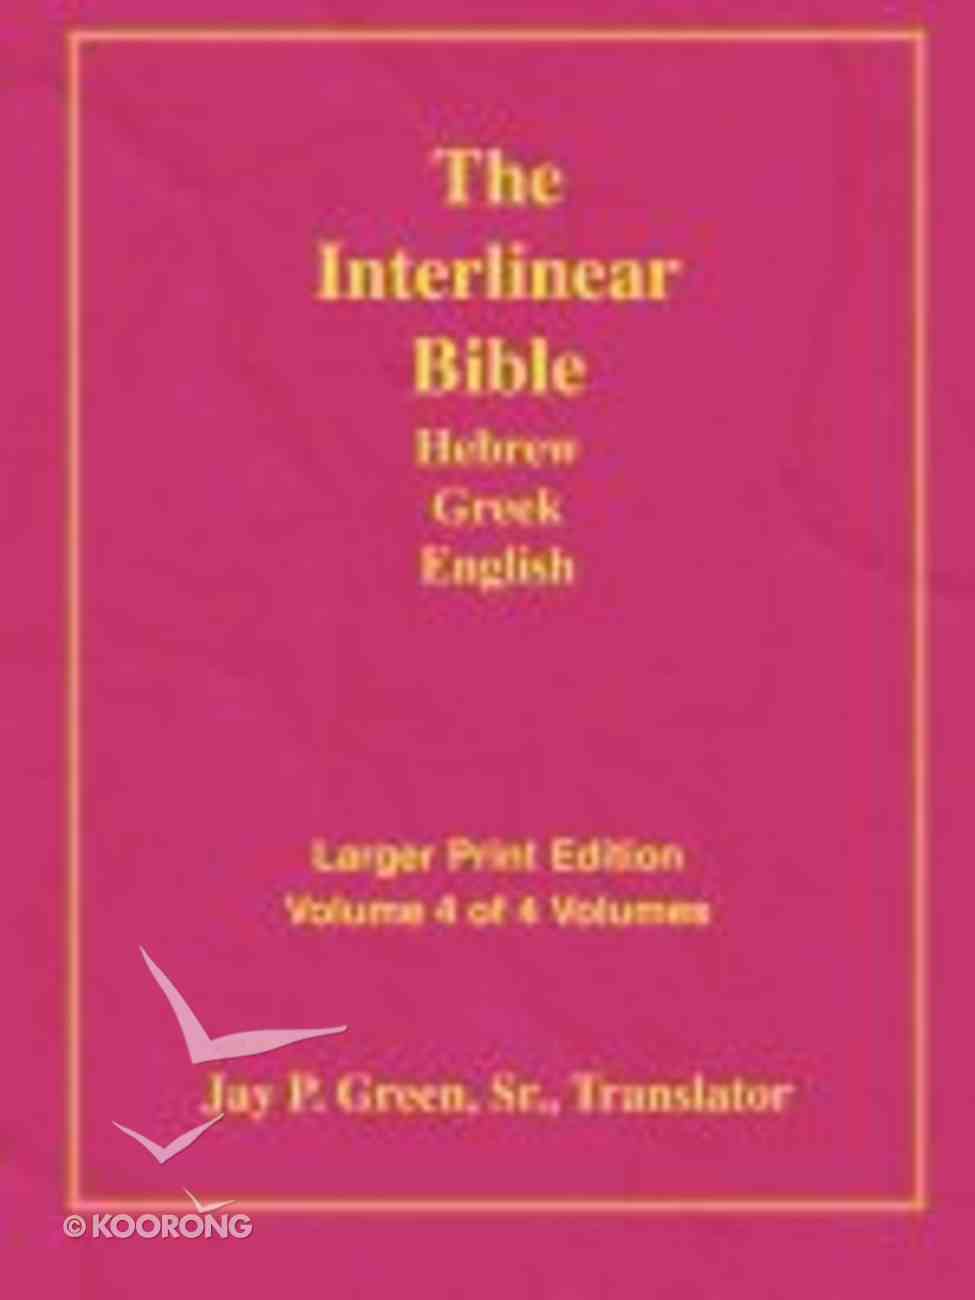 koine greek interlinear english bible